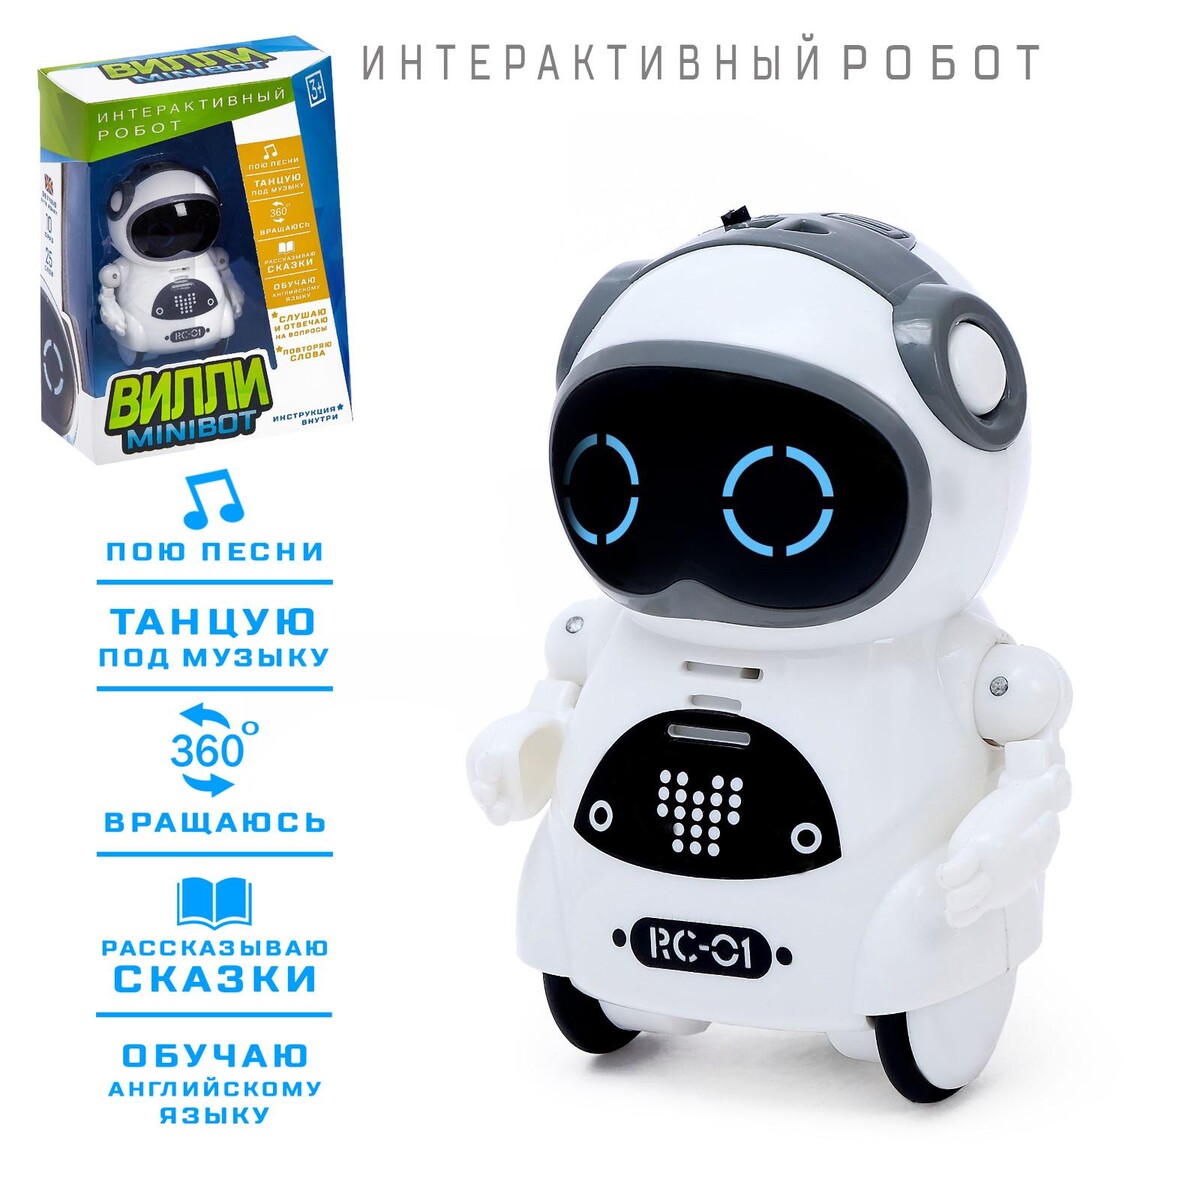 Iq робот-игрушка интерактивный робот интерактивный на радиоуправлении unitrain 1002661